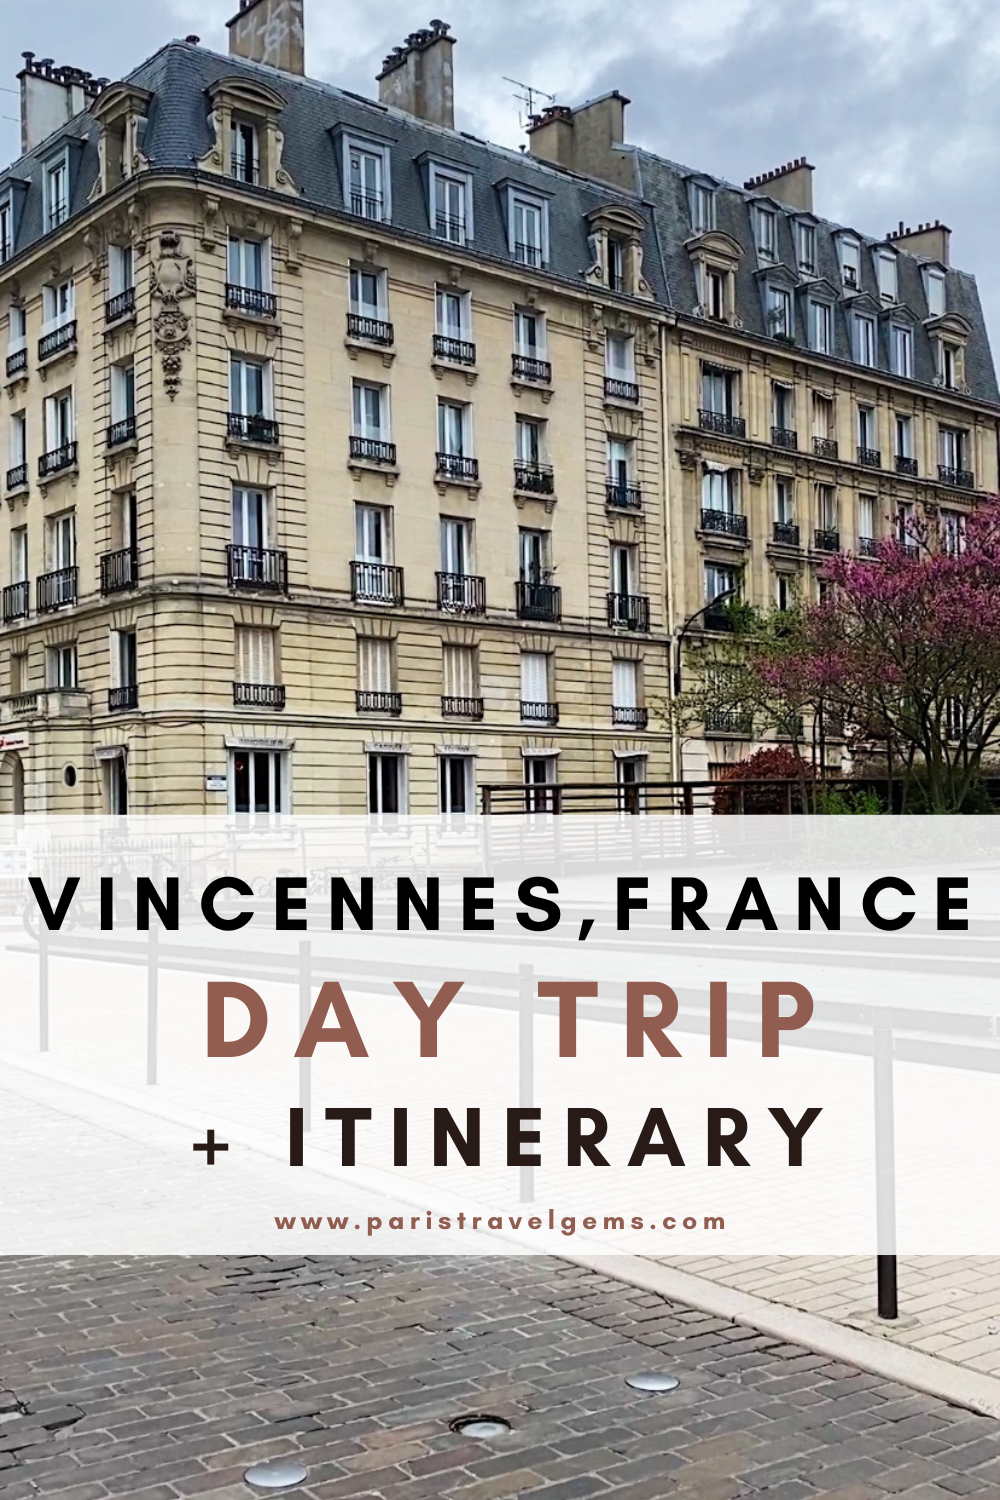 Vincennes: Beautiful sights and Hidden Treasures